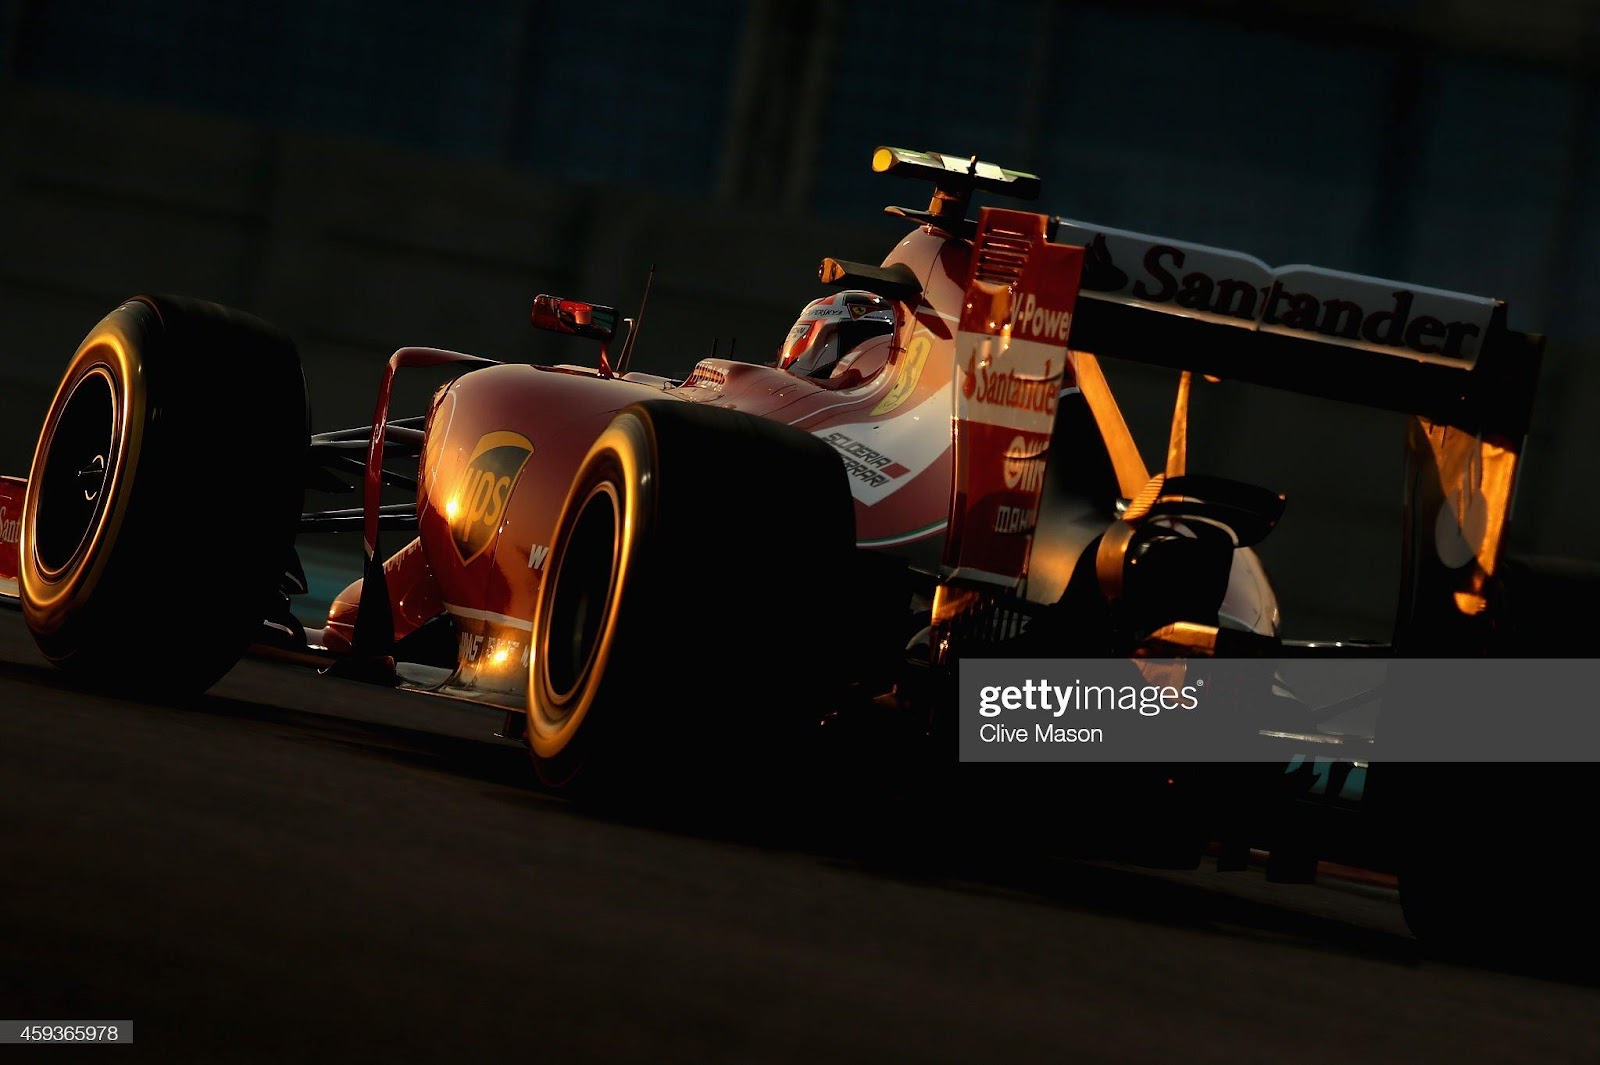 Kimi Raikkonen, Ferrari, drives during practice ahead of the Abu Dhabi F1 Grand Prix at Yas Marina Circuit on November 21, 2014 in Abu Dhabi, United Arab Emirates.